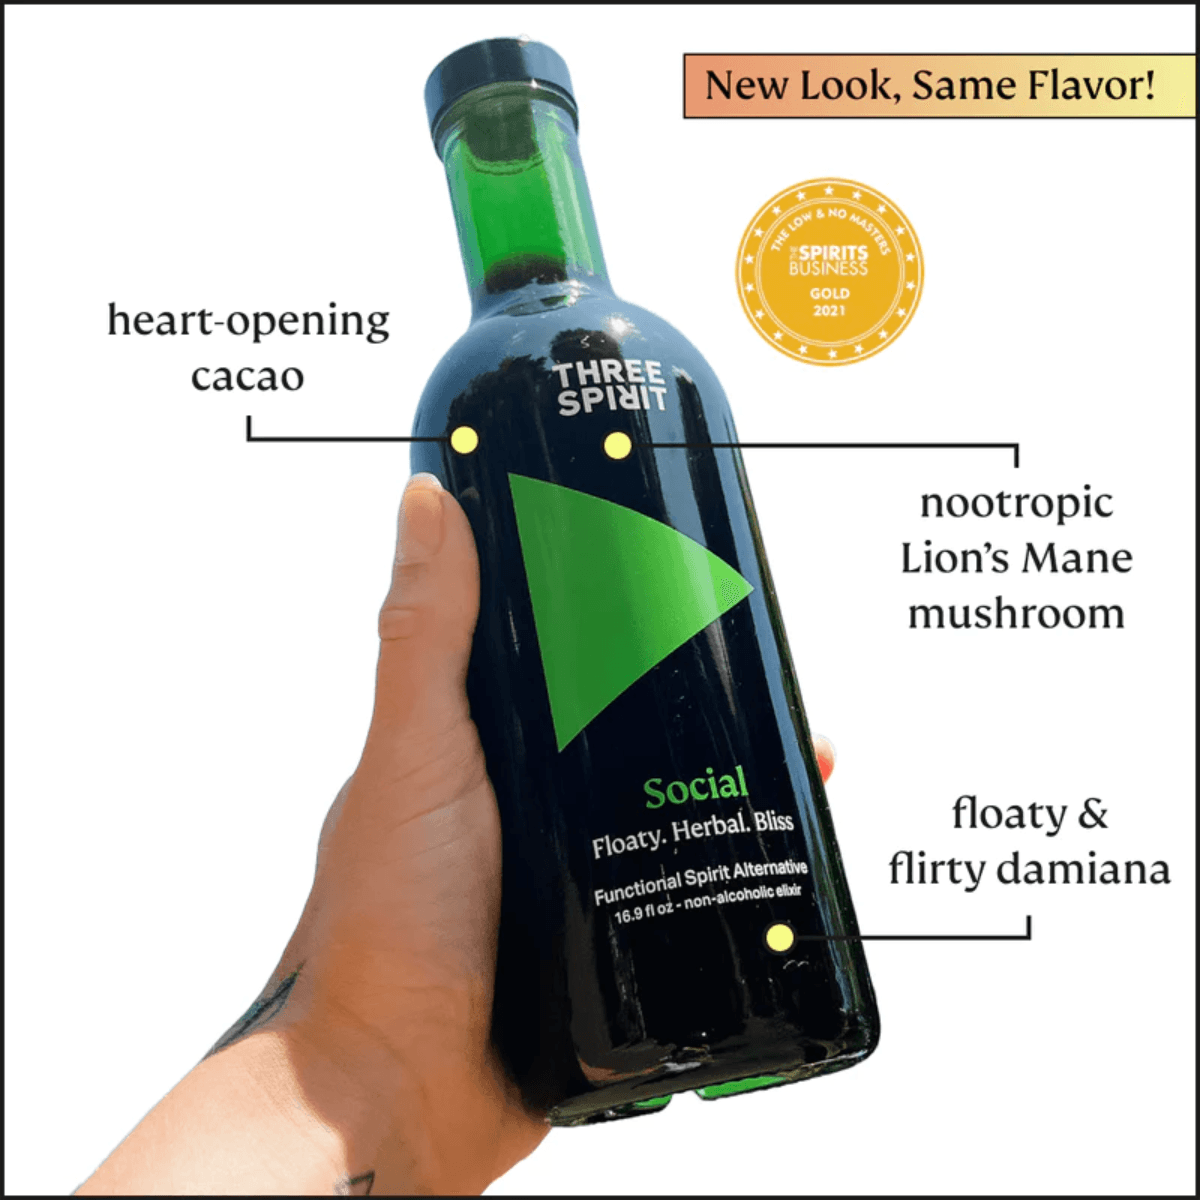 Three Spirits - Social Elixir - Halal Wine Cellar